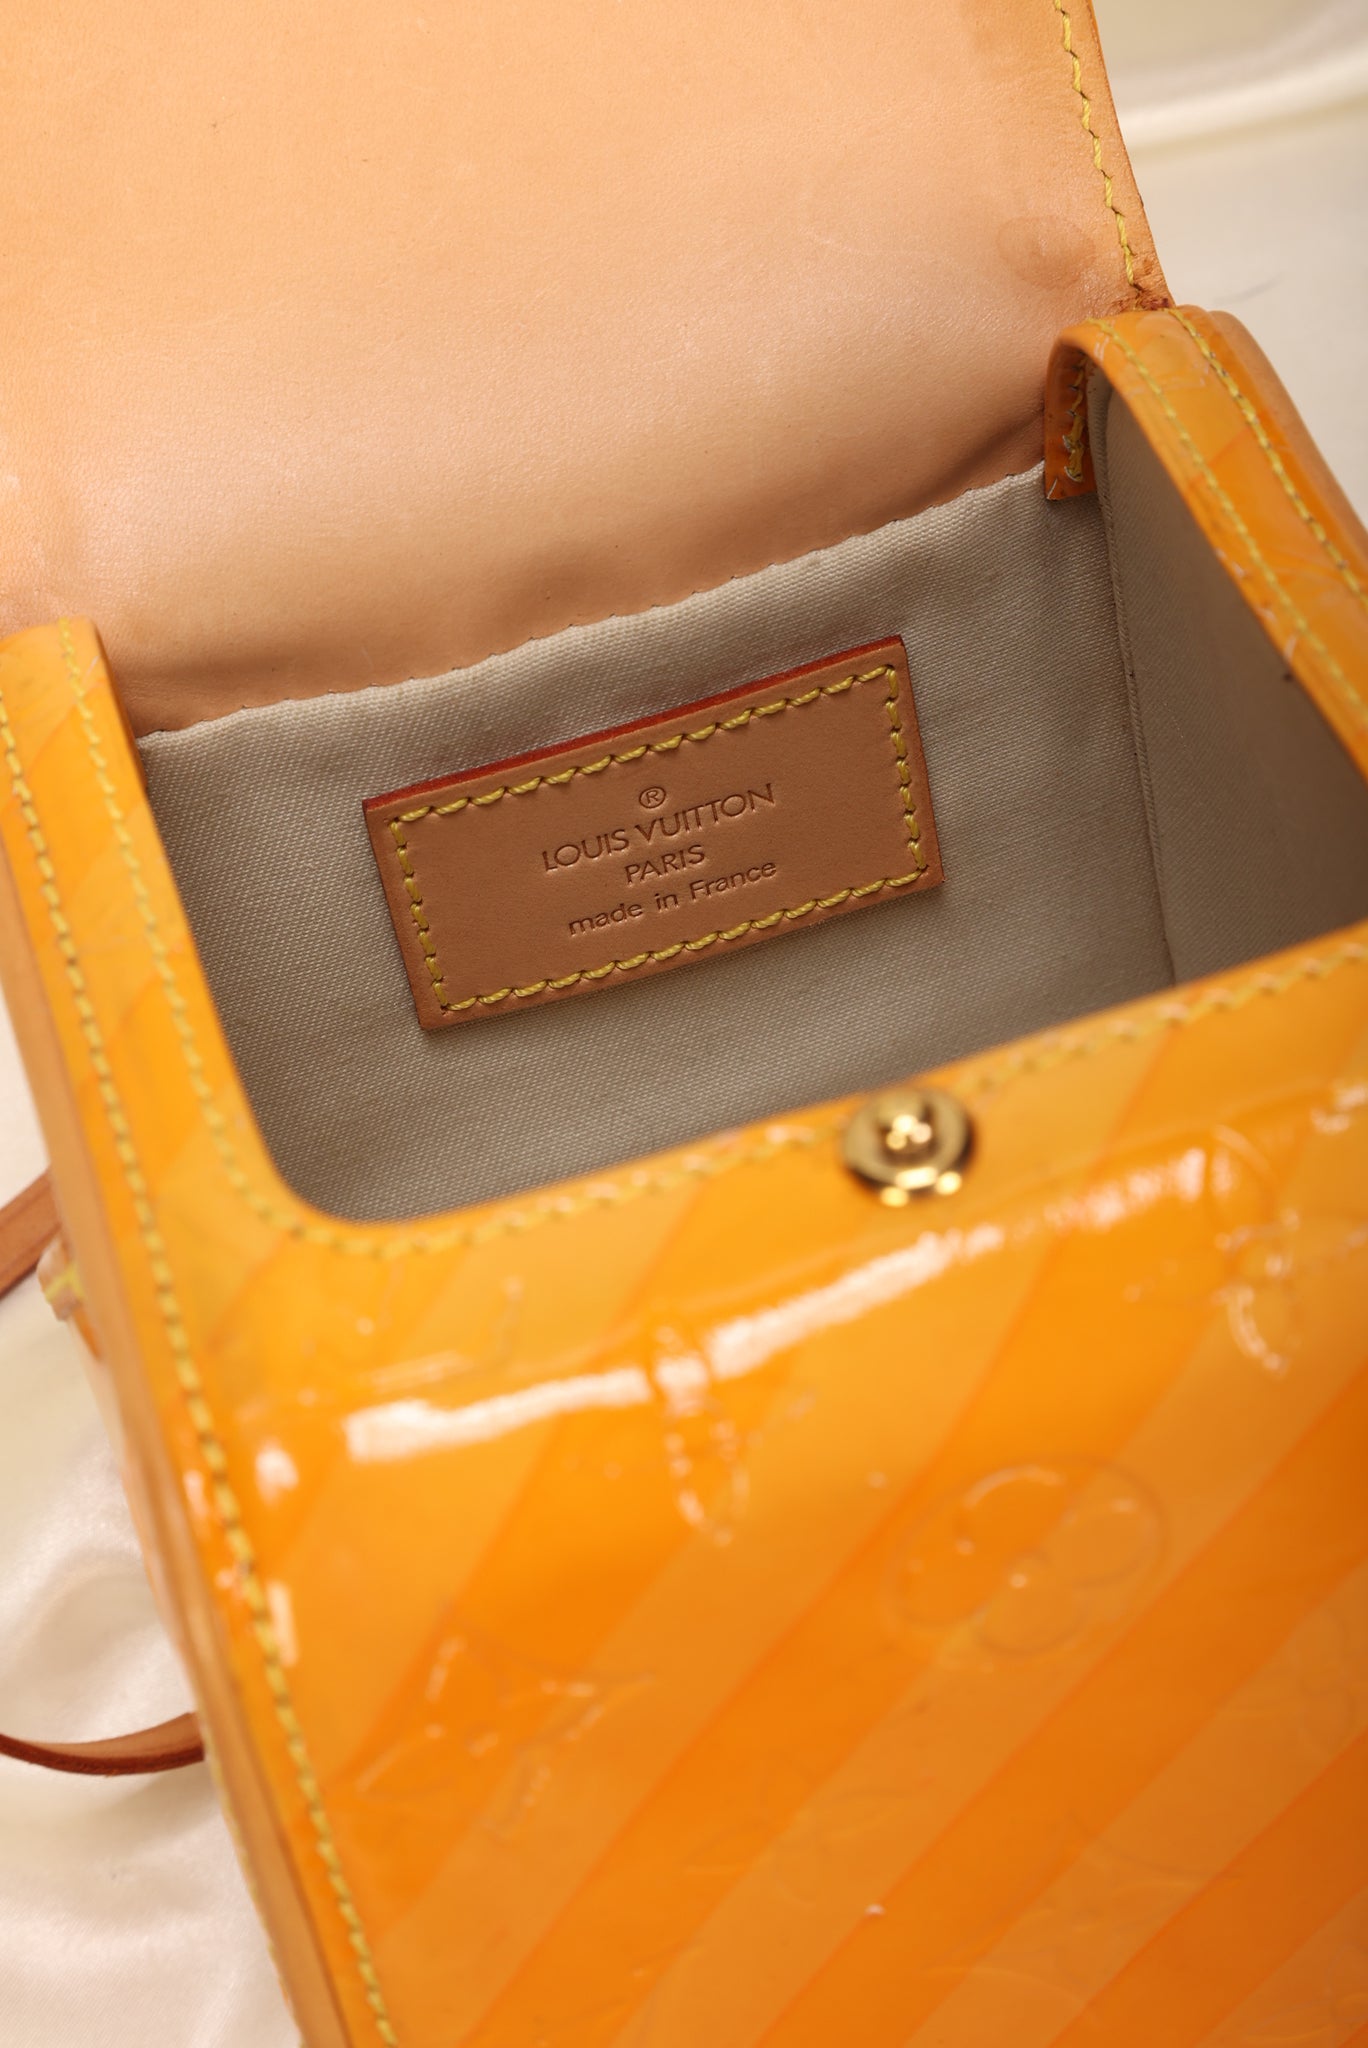 Ultra-Rare Louis Vuitton Vernis Box Bag